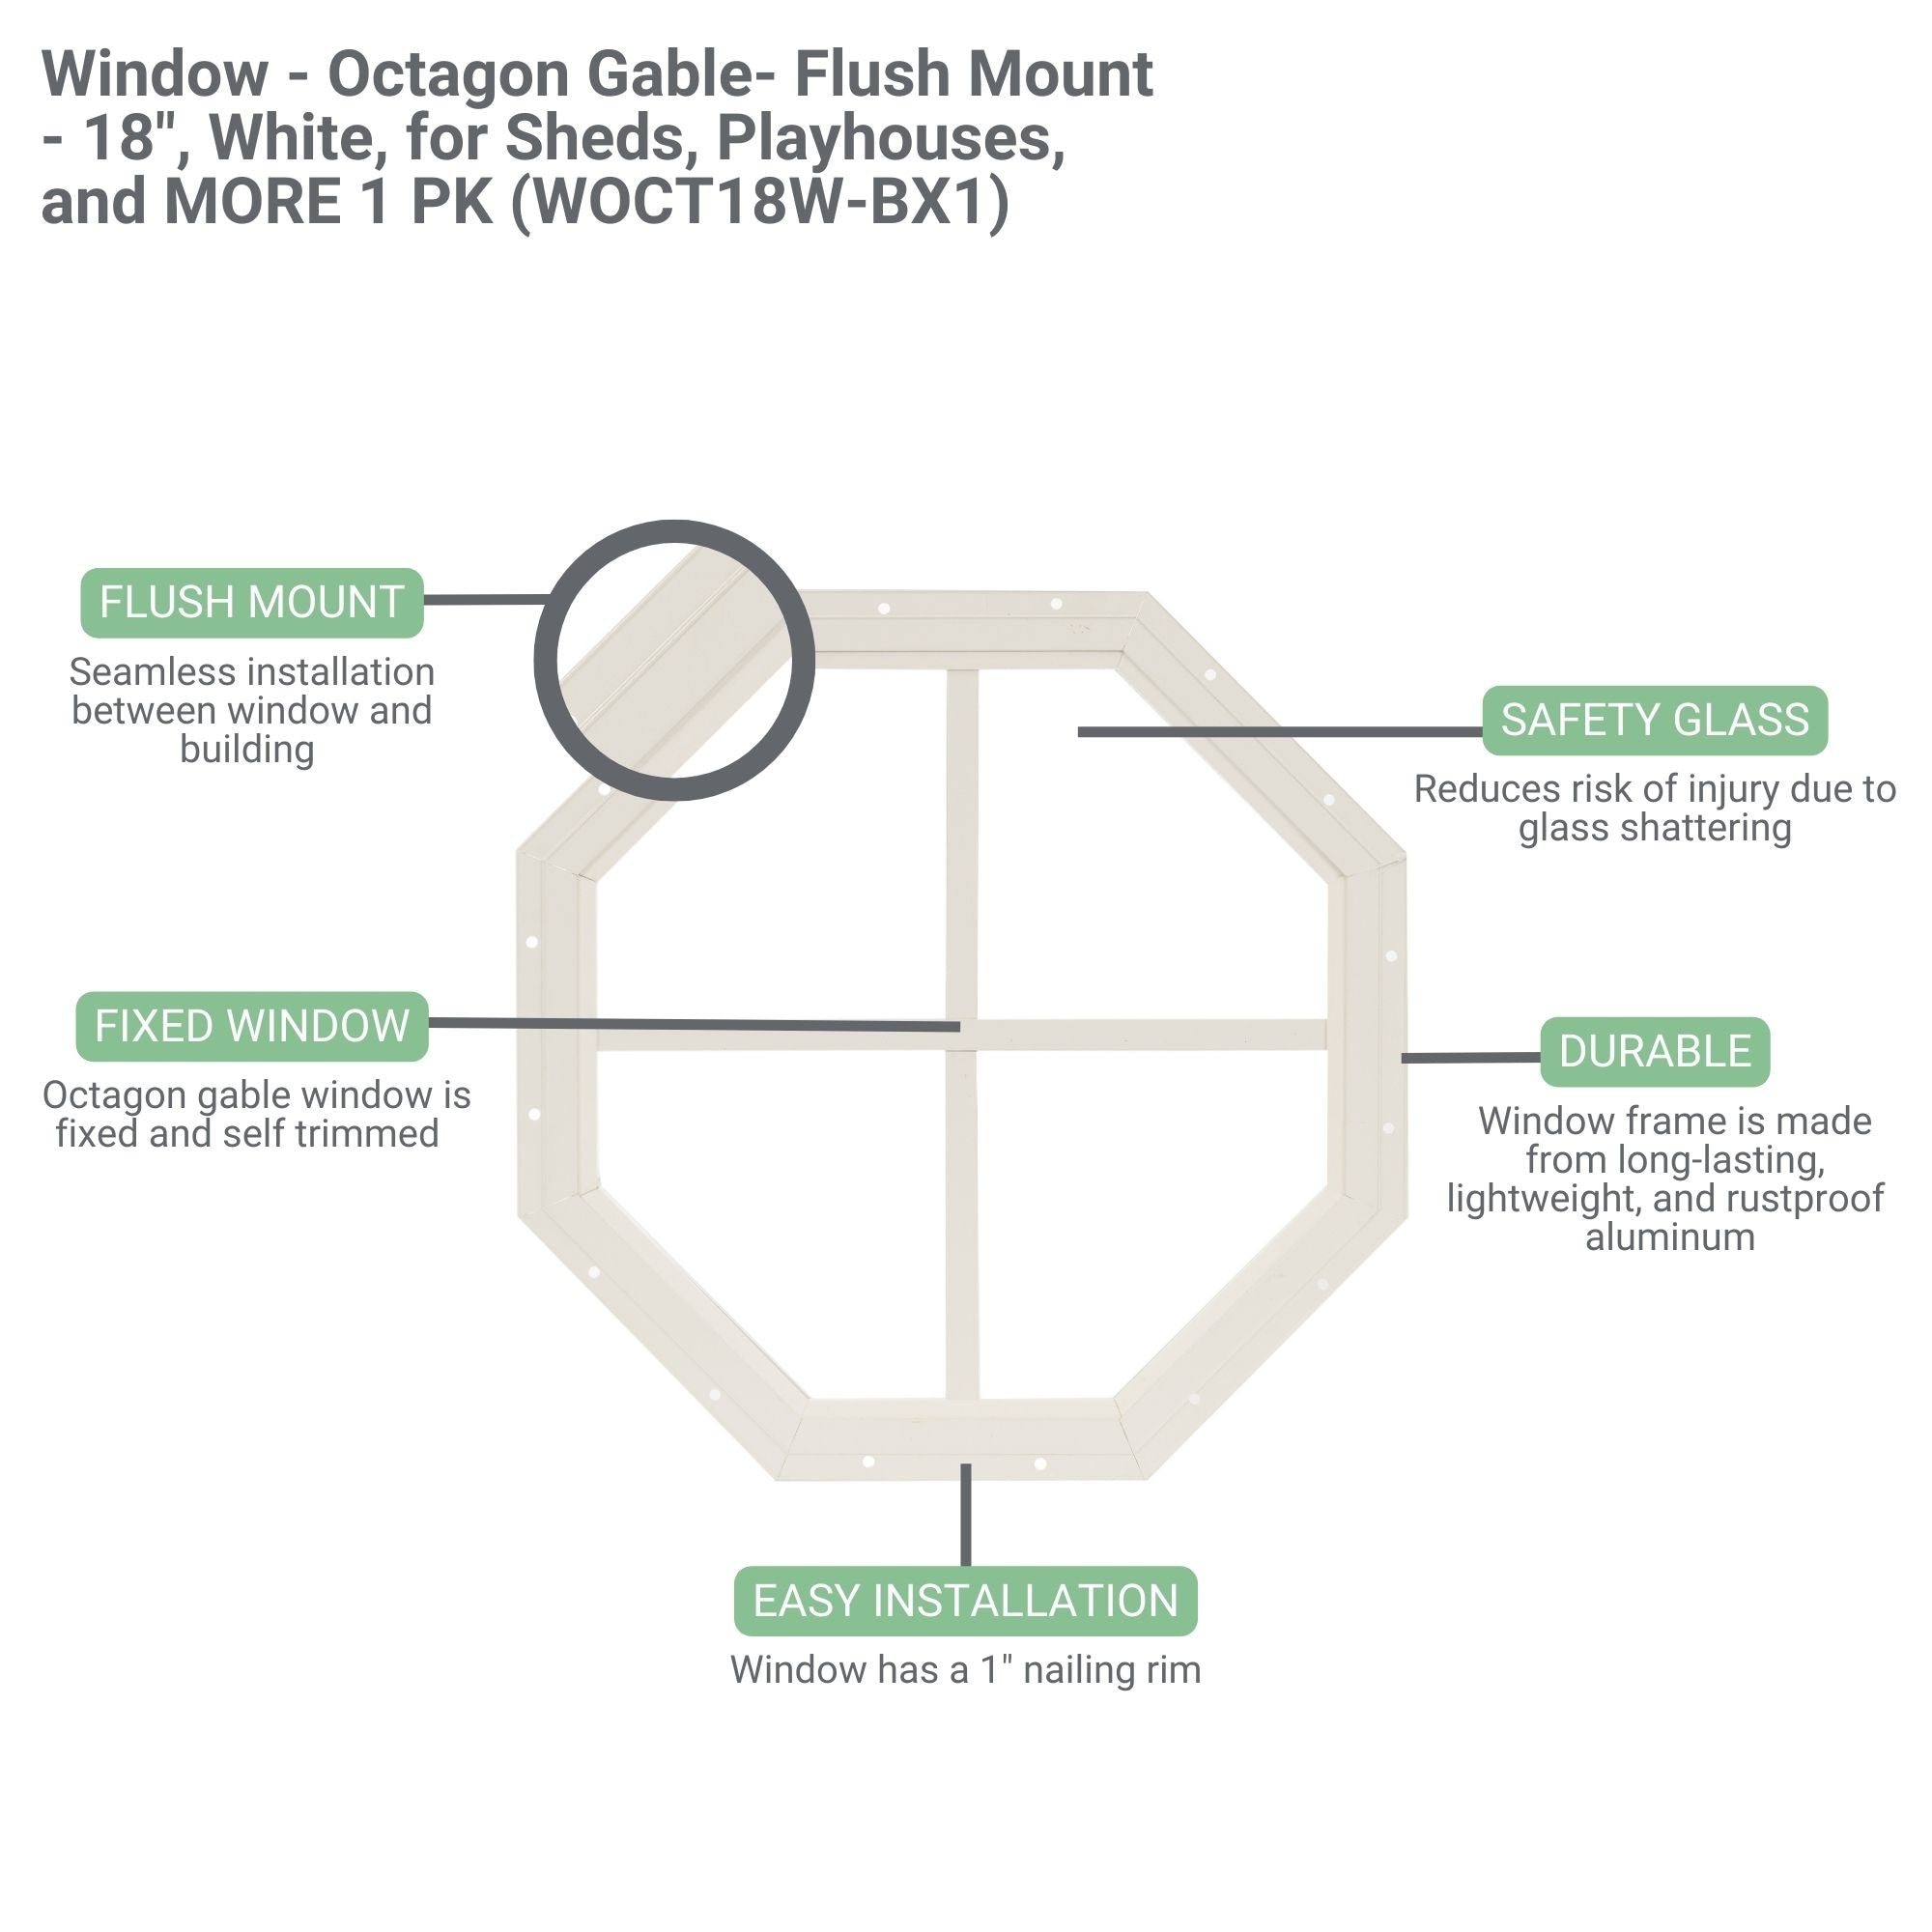 18" Octagon Gable Flush Mount Shed Window